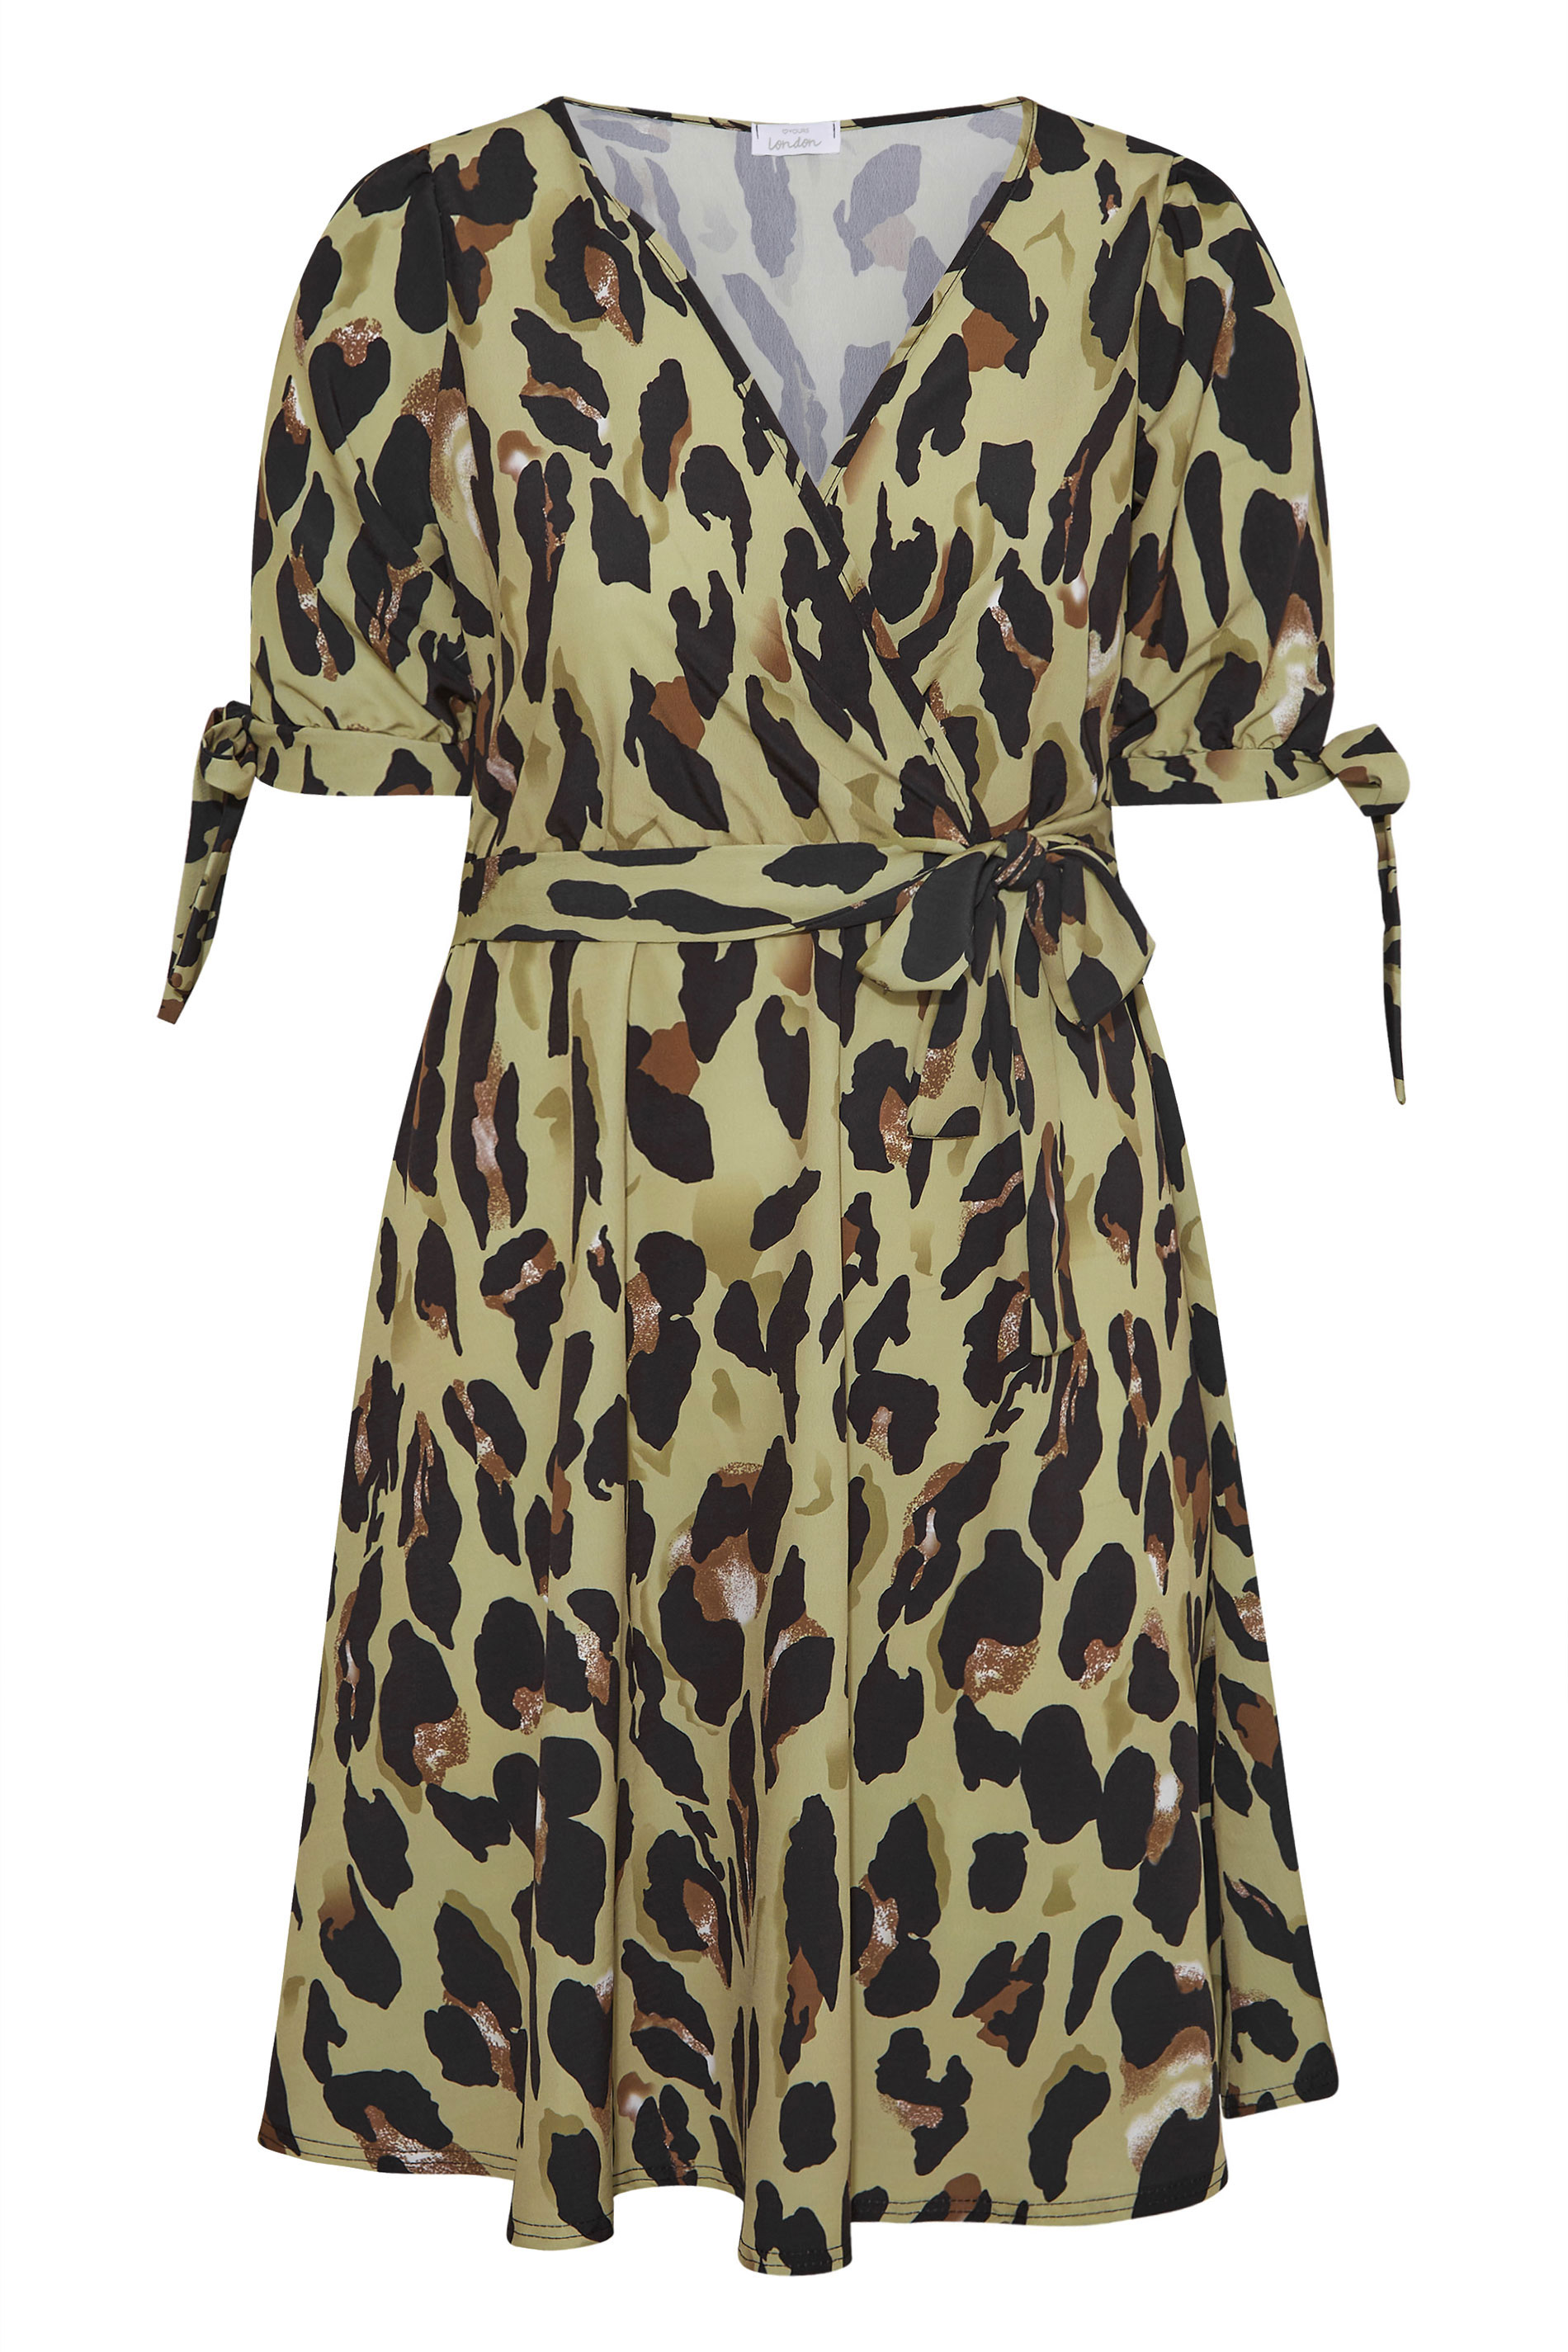 Robes Grande Taille Grande taille  Robes Portefeuilles | YOURS LONDON - Robe Cache-Coeur Verte Kaki Léopard - JS14378